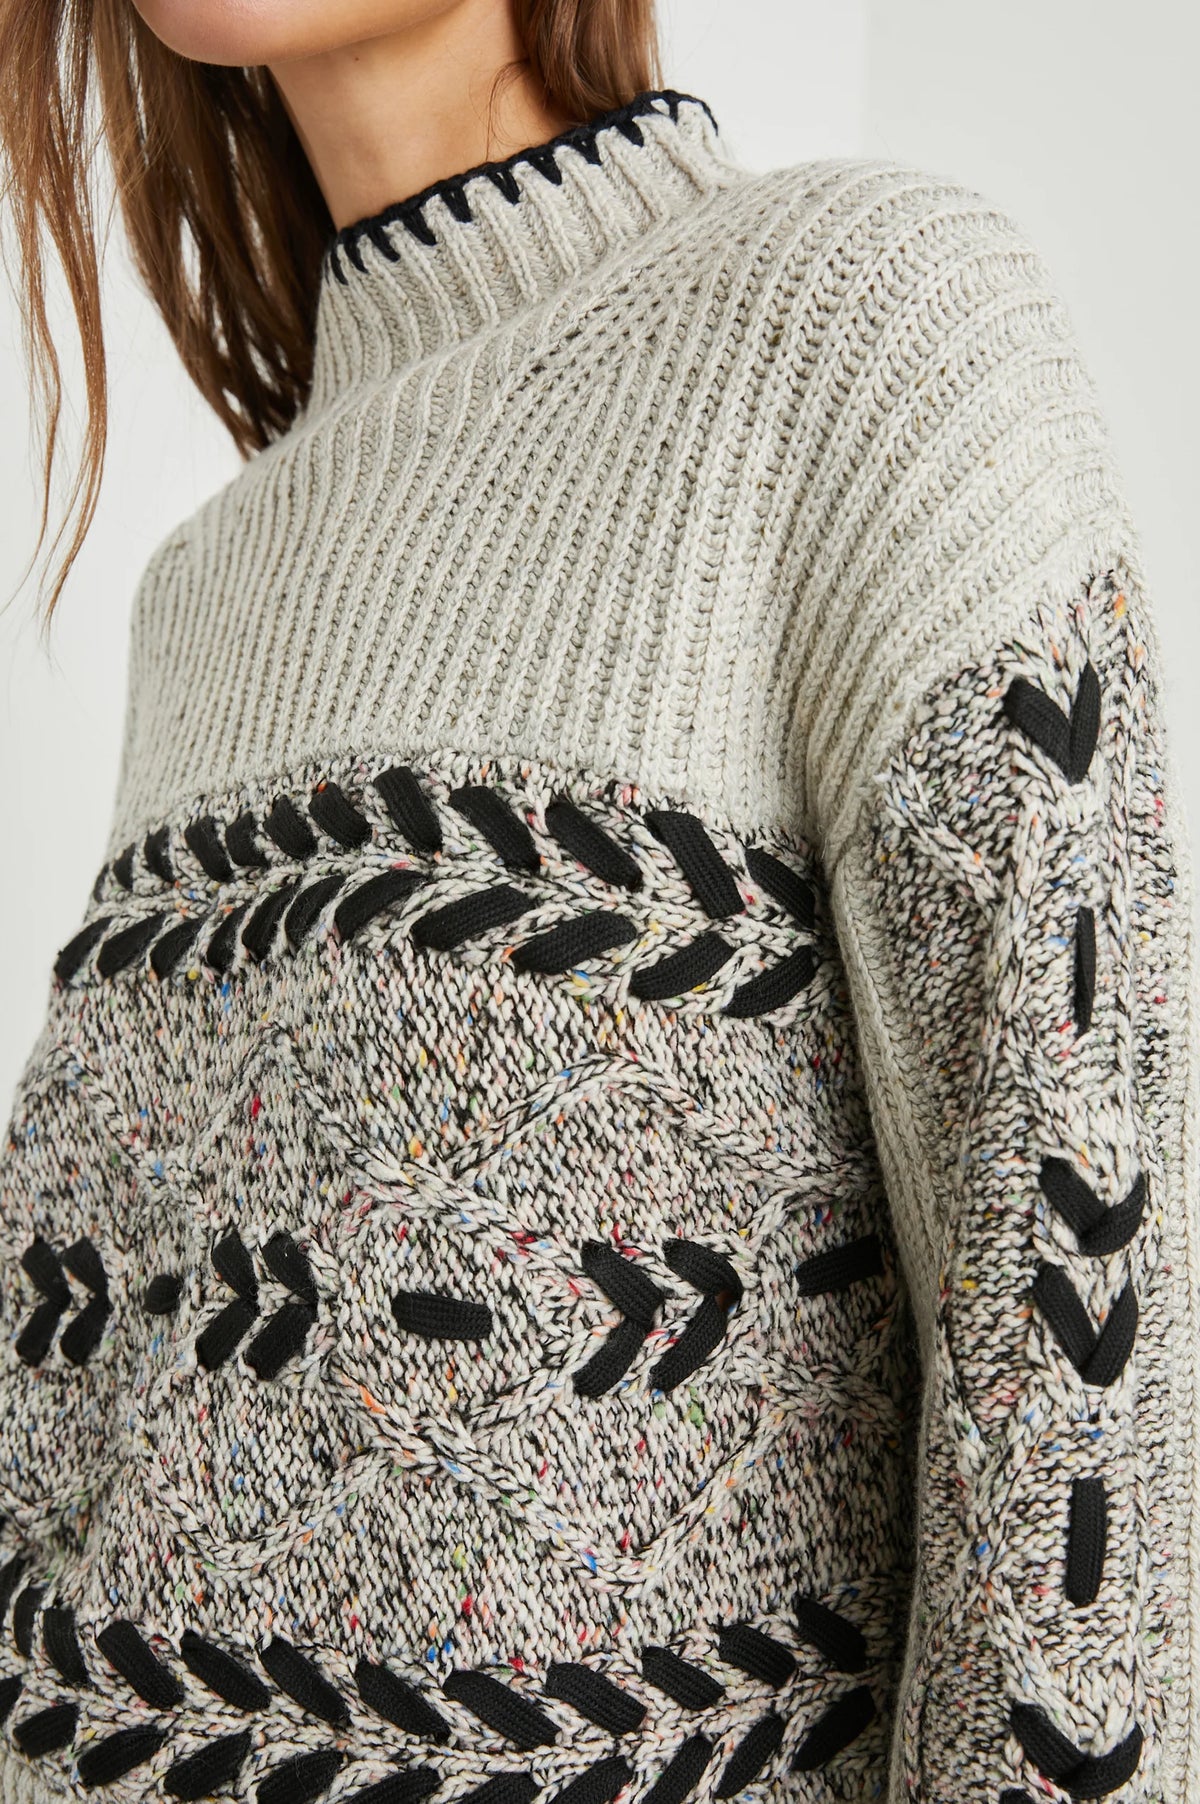 Raini Sweater